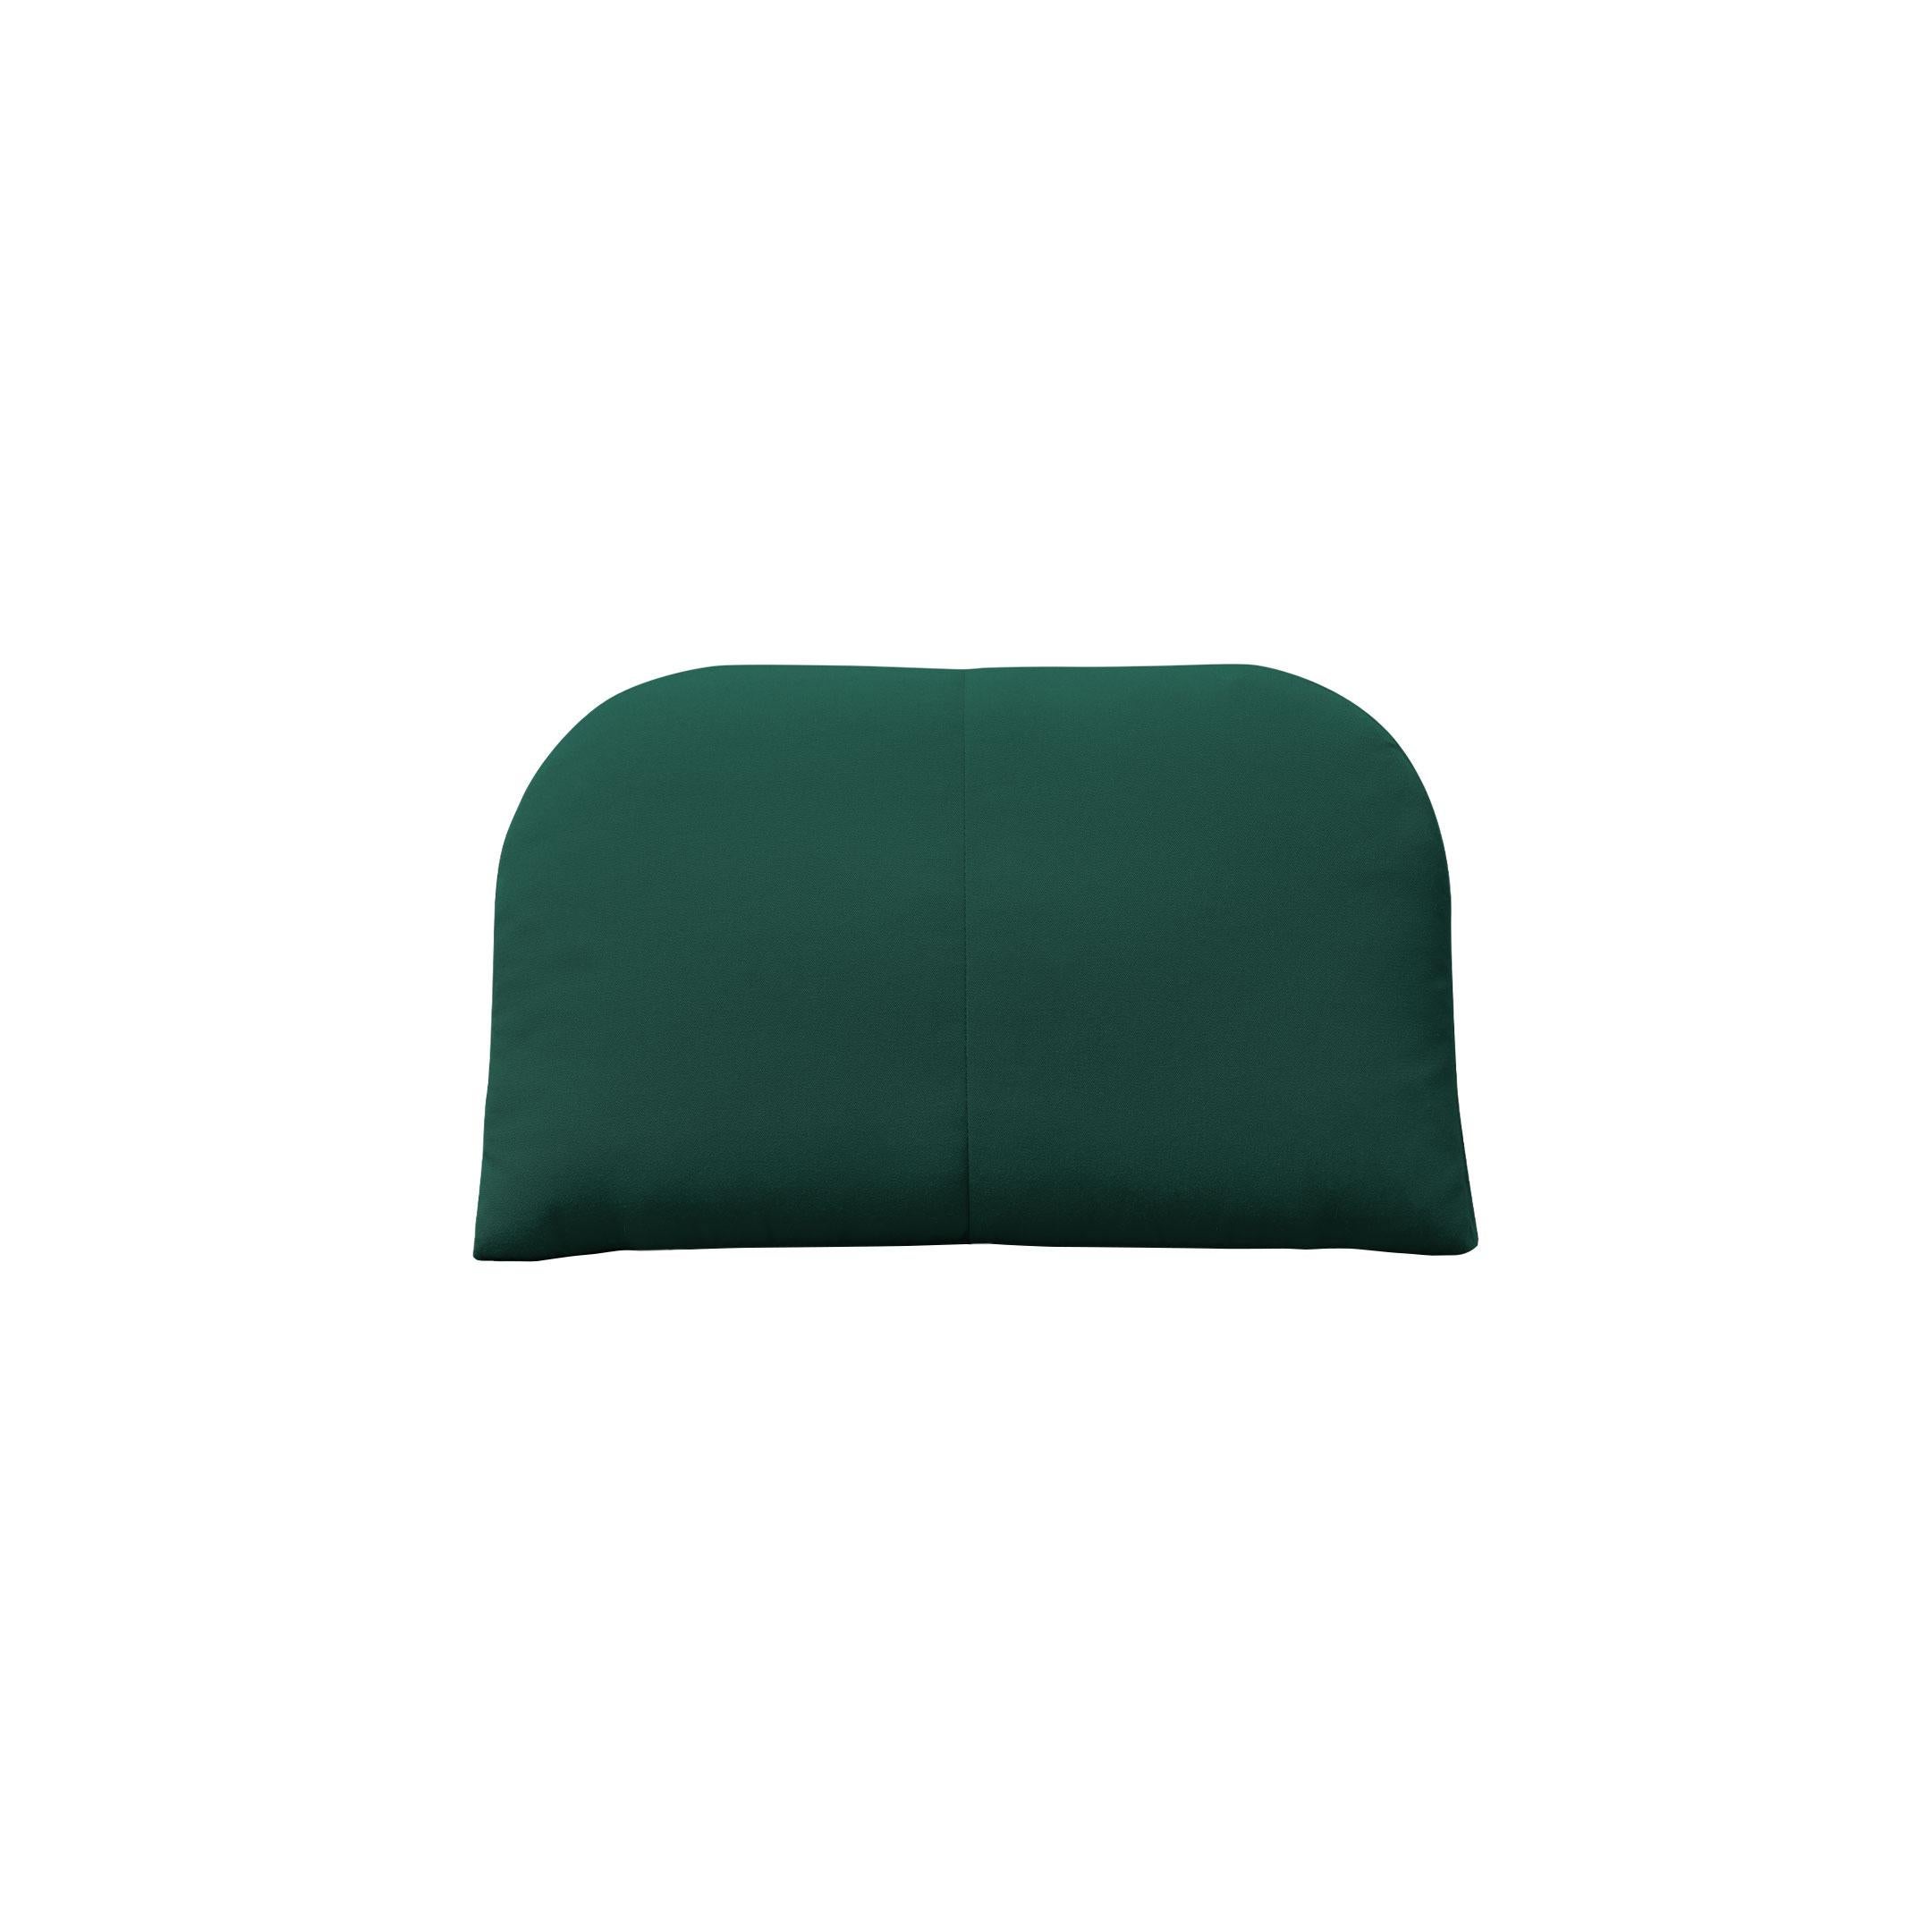 Woven Bend Goods - Arc Throw Pillow in Melon Sunbrella For Sale